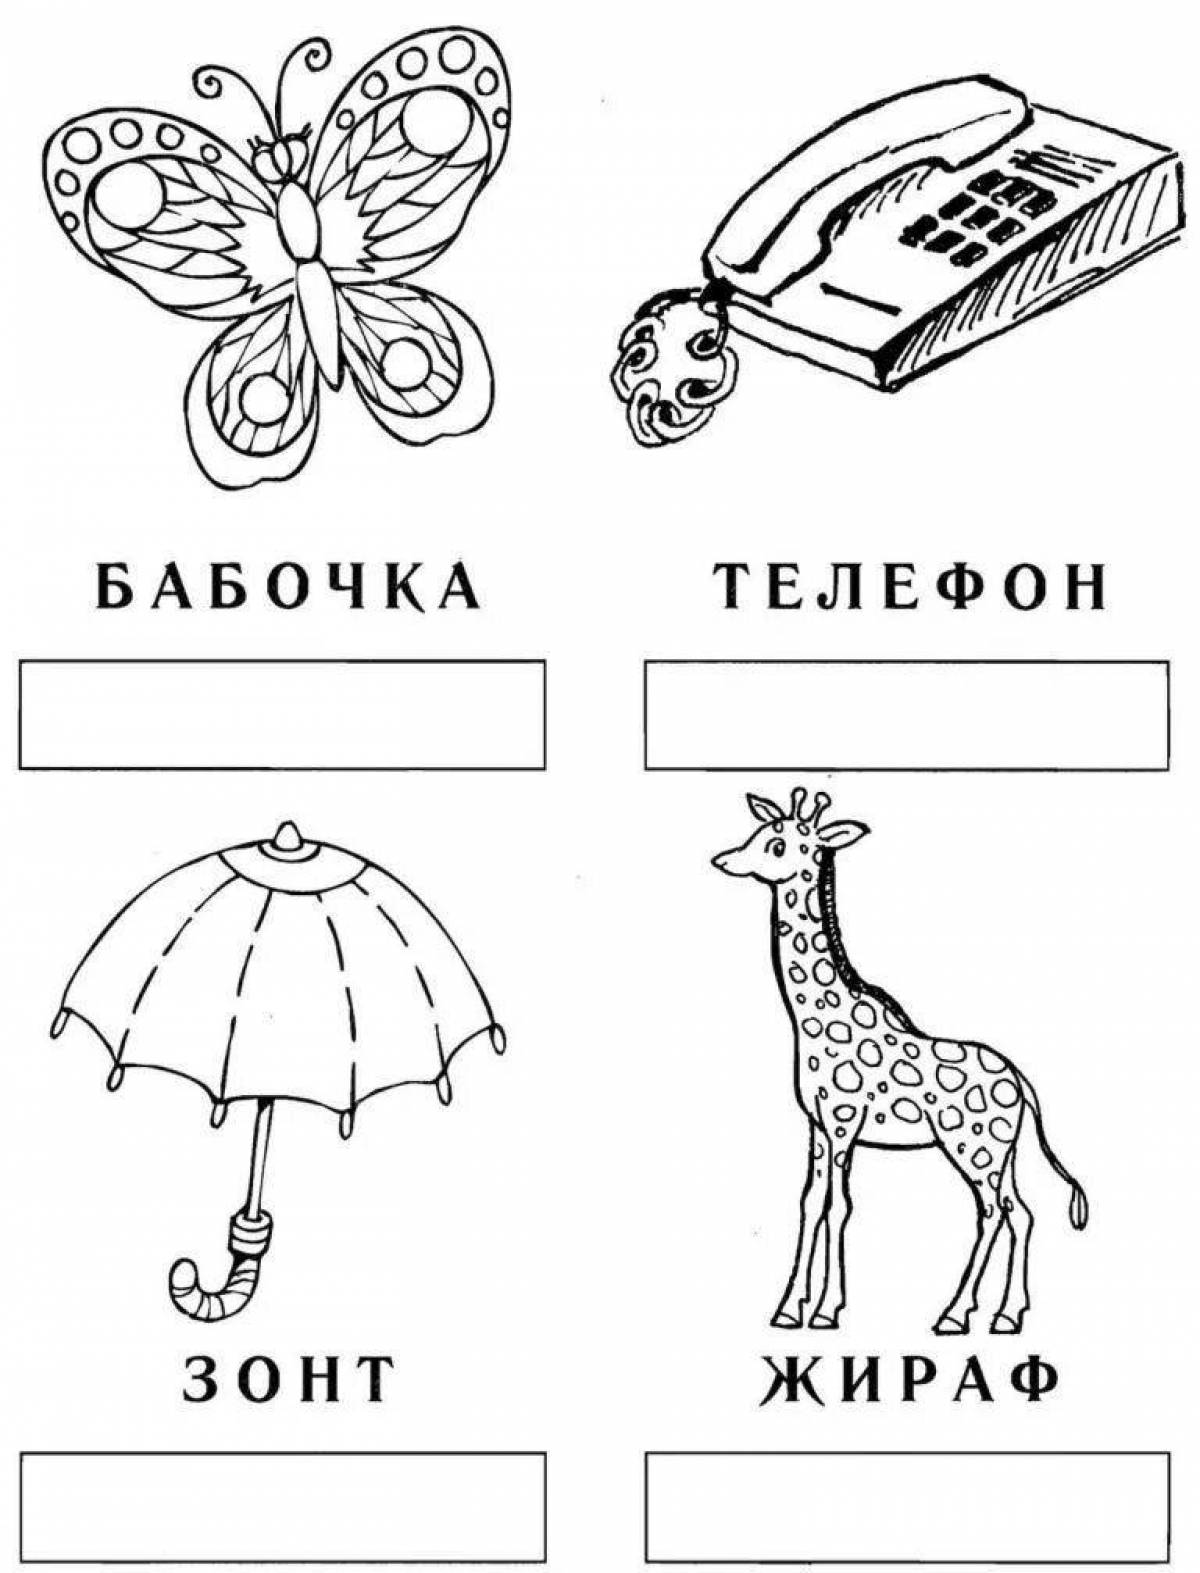 Delightful coloring in Russian 1st grade